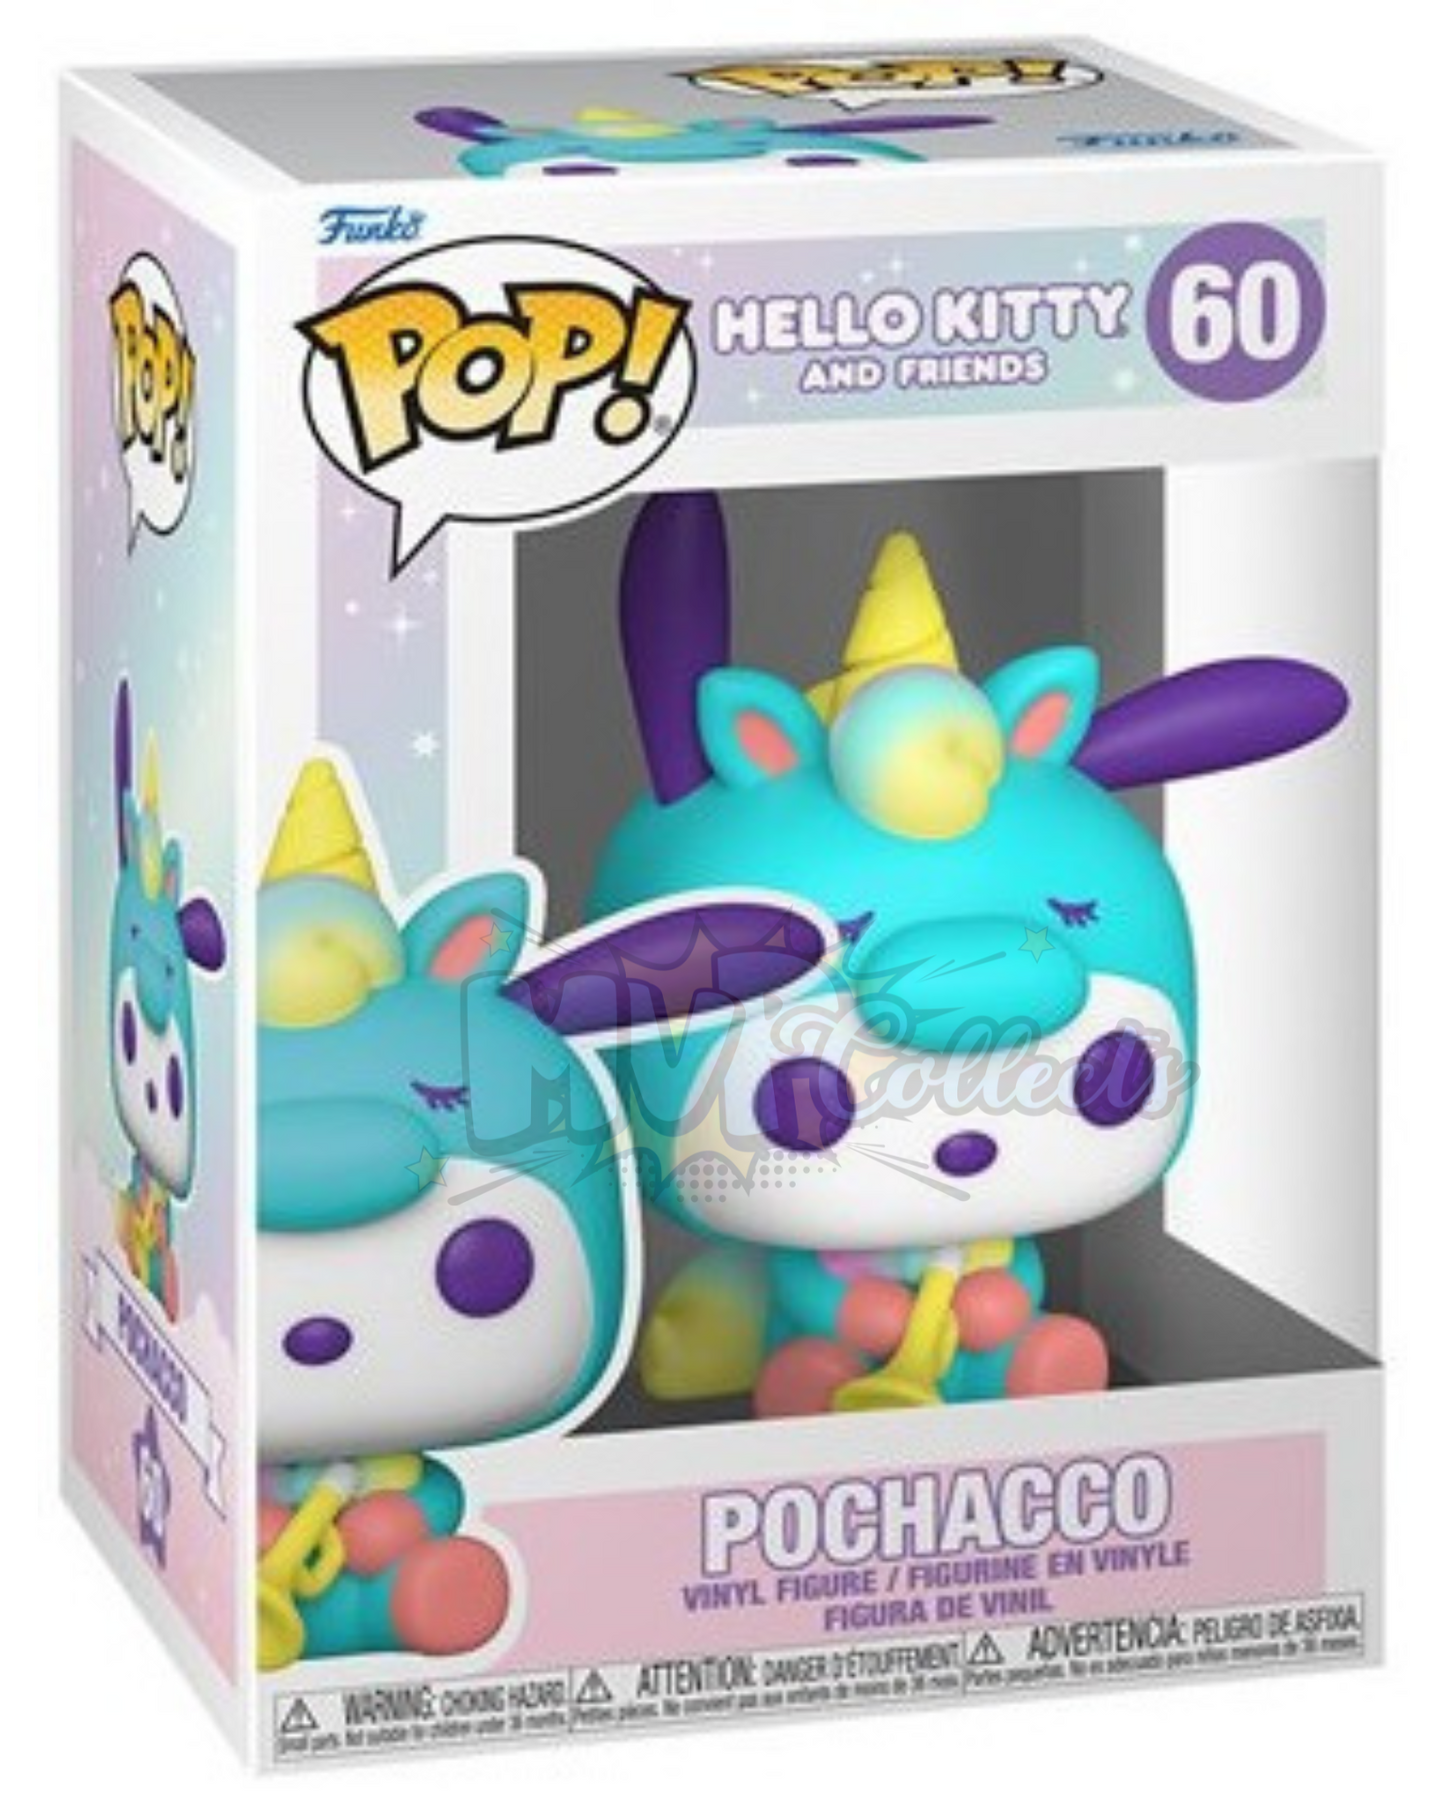 Pochacco Funko POP! (Hello Kitty and Friends) - 60